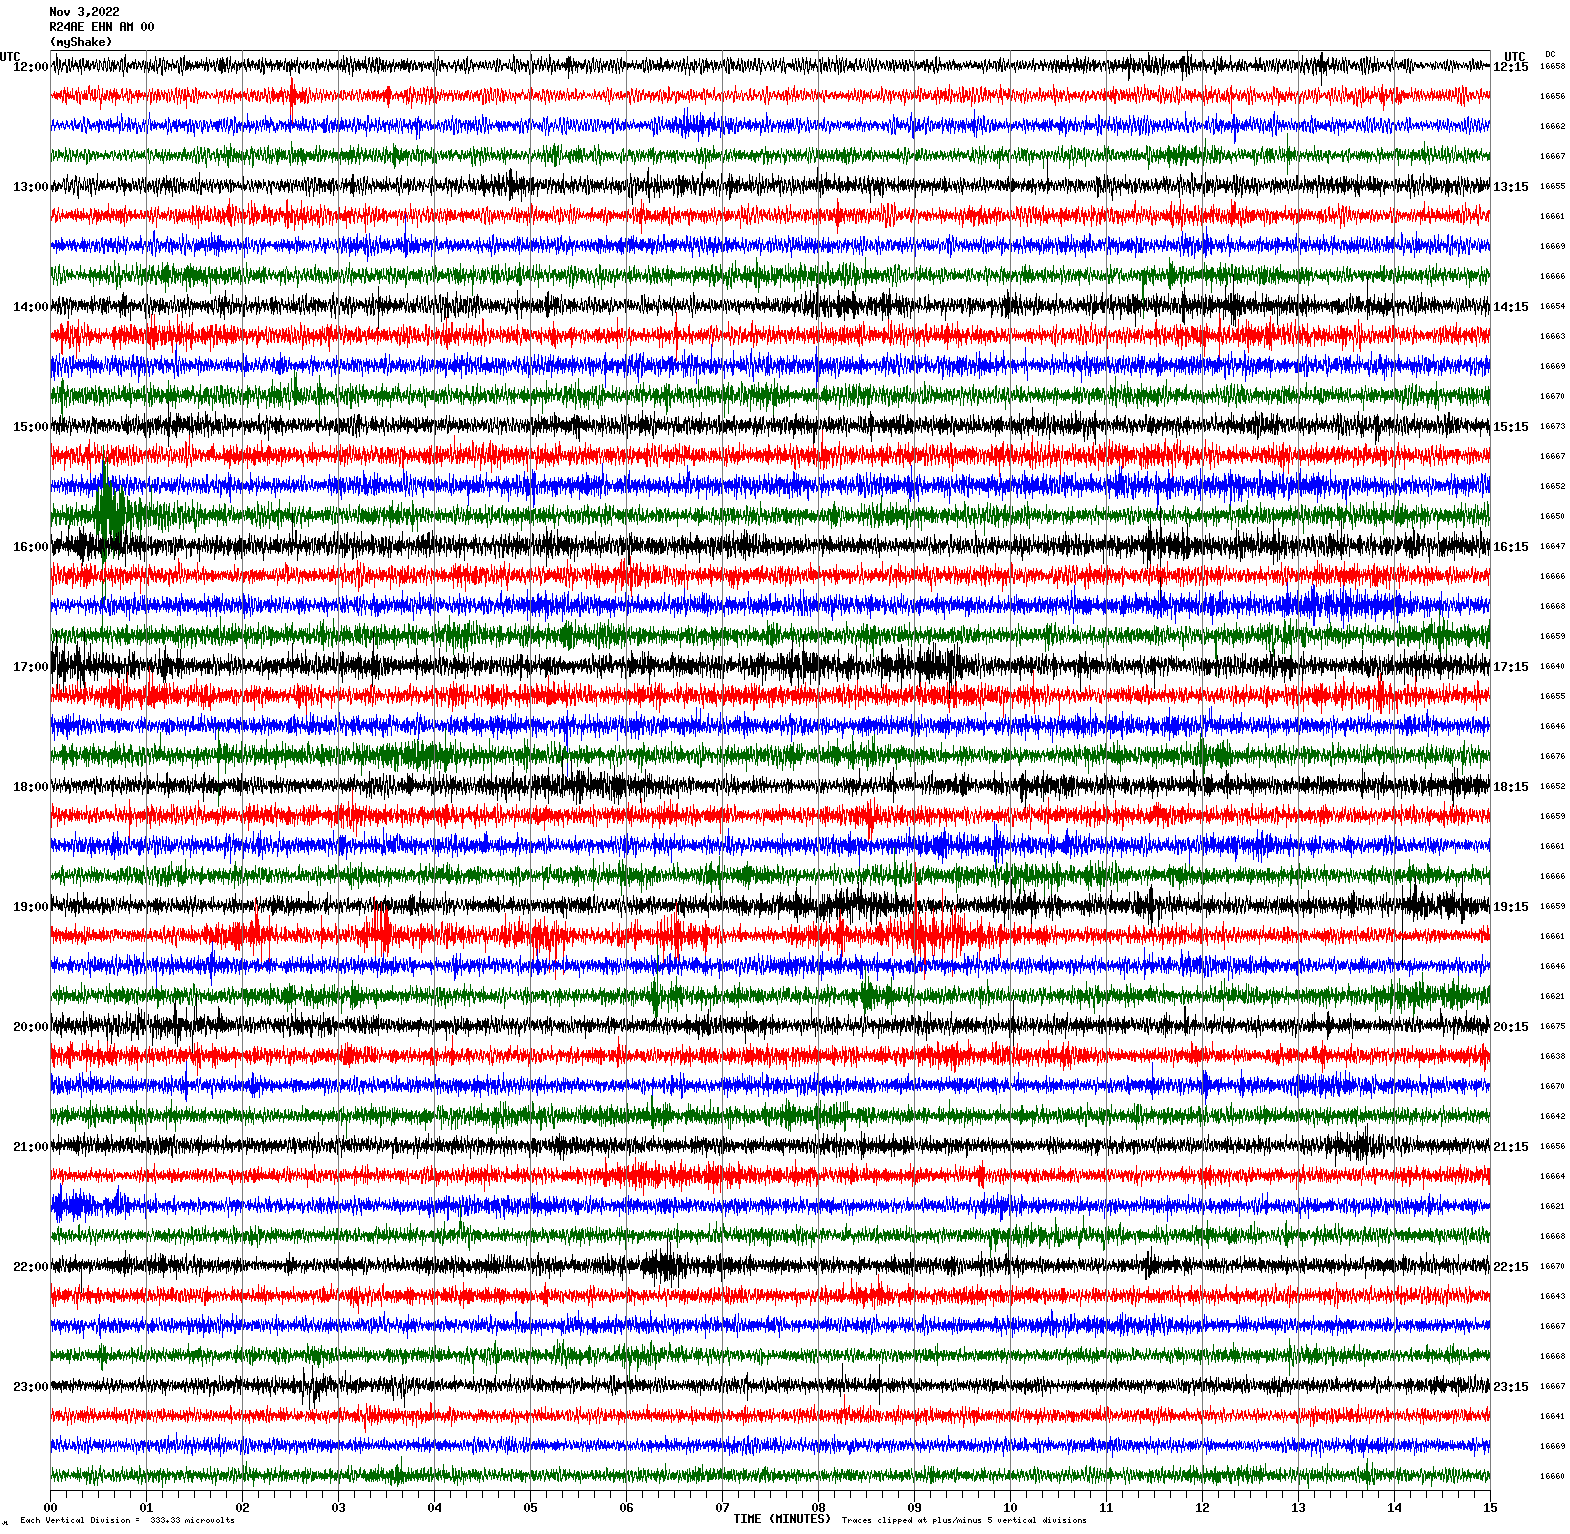 /seismic-data/R24AE/R24AE_EHN_AM_00.2022110312.gif